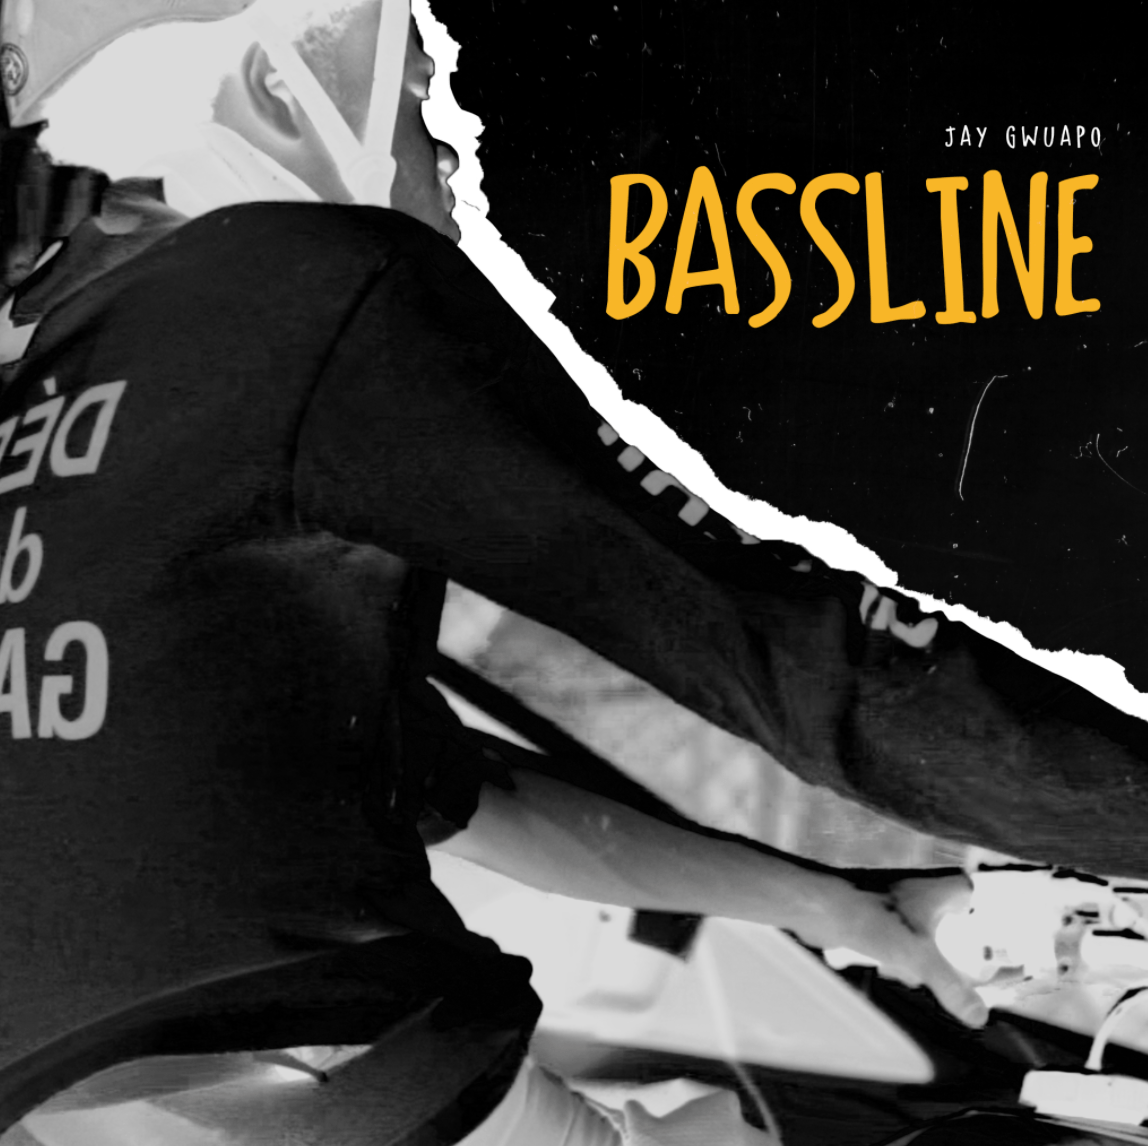 Bassline via RCA Records for use by 360 Magazine